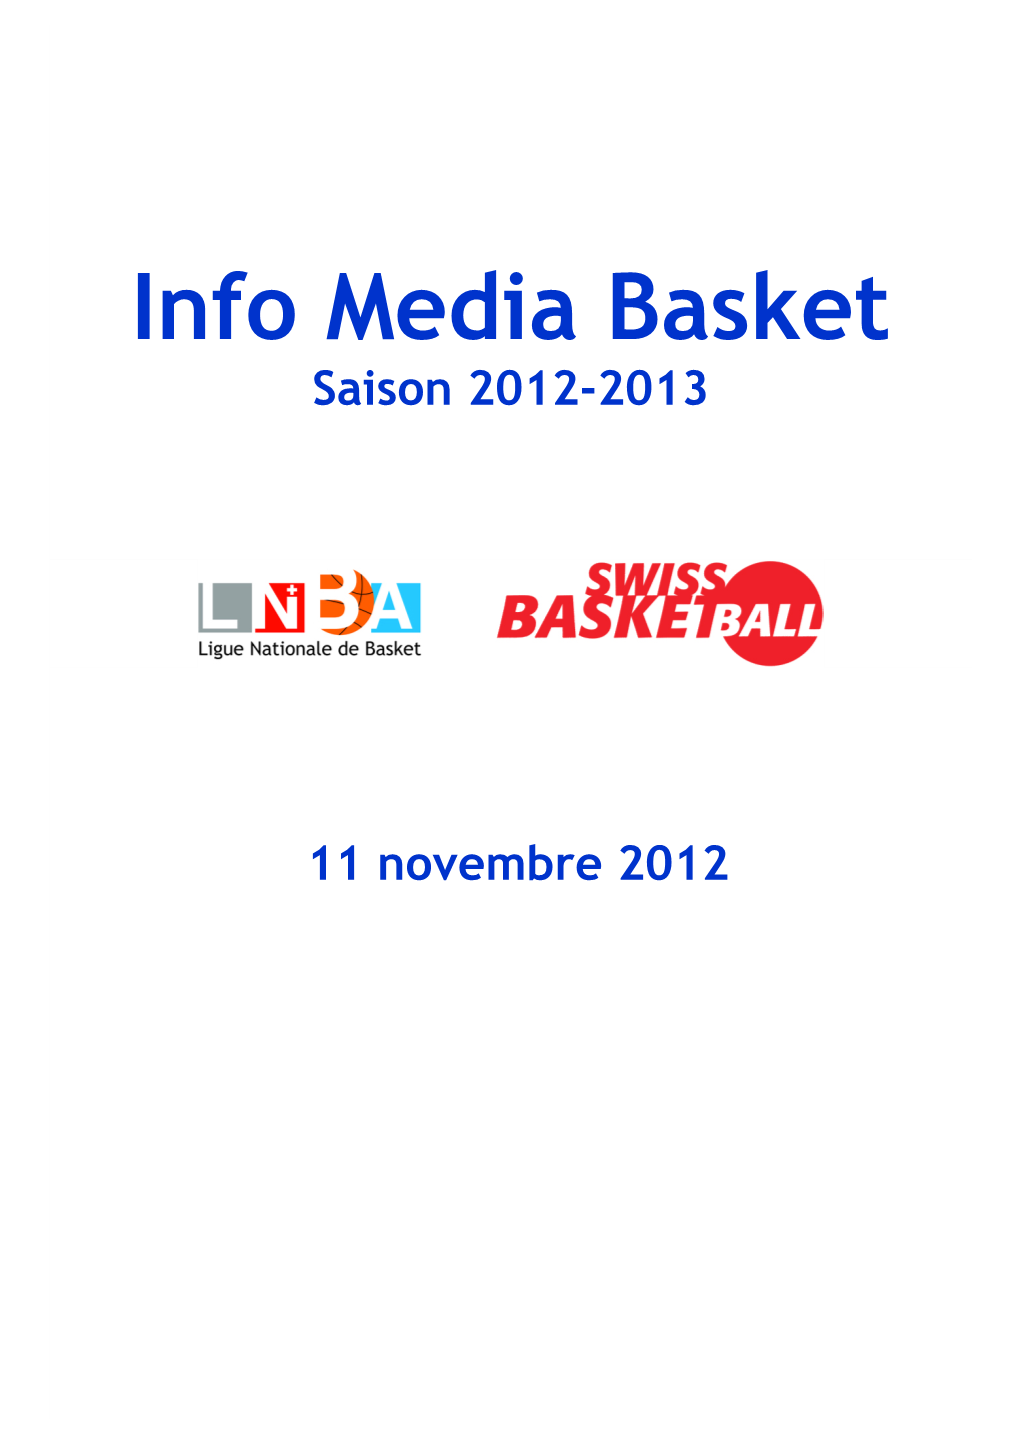 Info Media Basket Saison 2012-2013